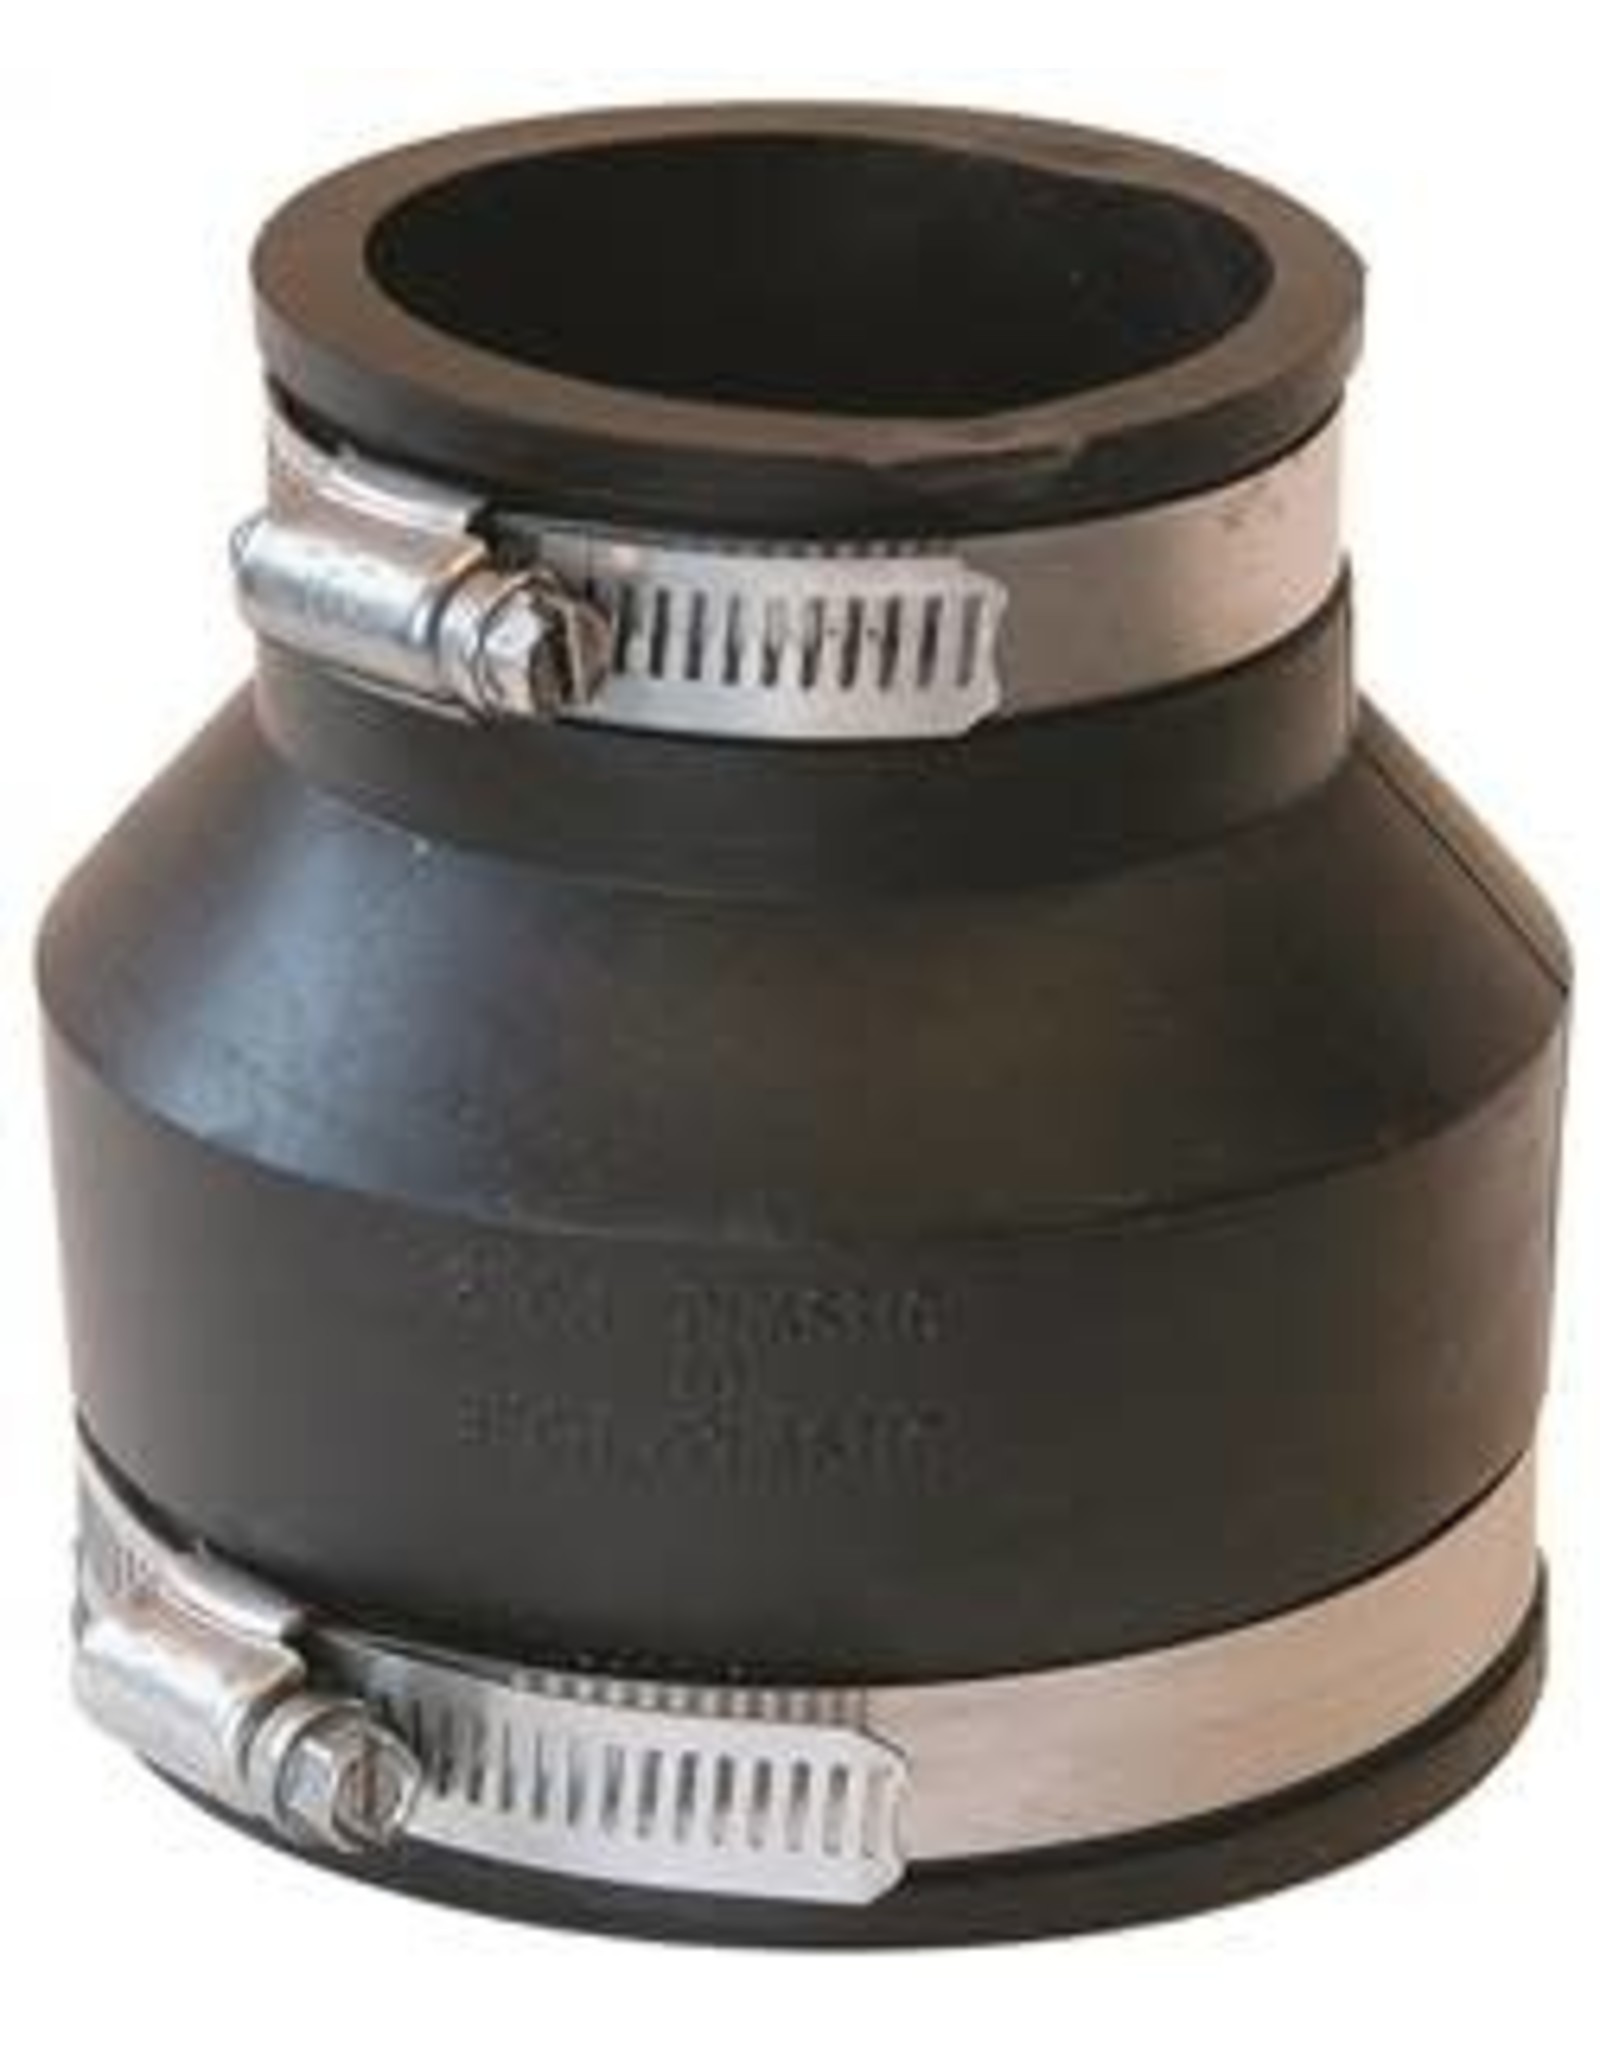 Fernco FERNCO P1056-32 Flexible Pipe Coupling, 3 x 2 in, PVC, Black, 4.3 psi Pressure